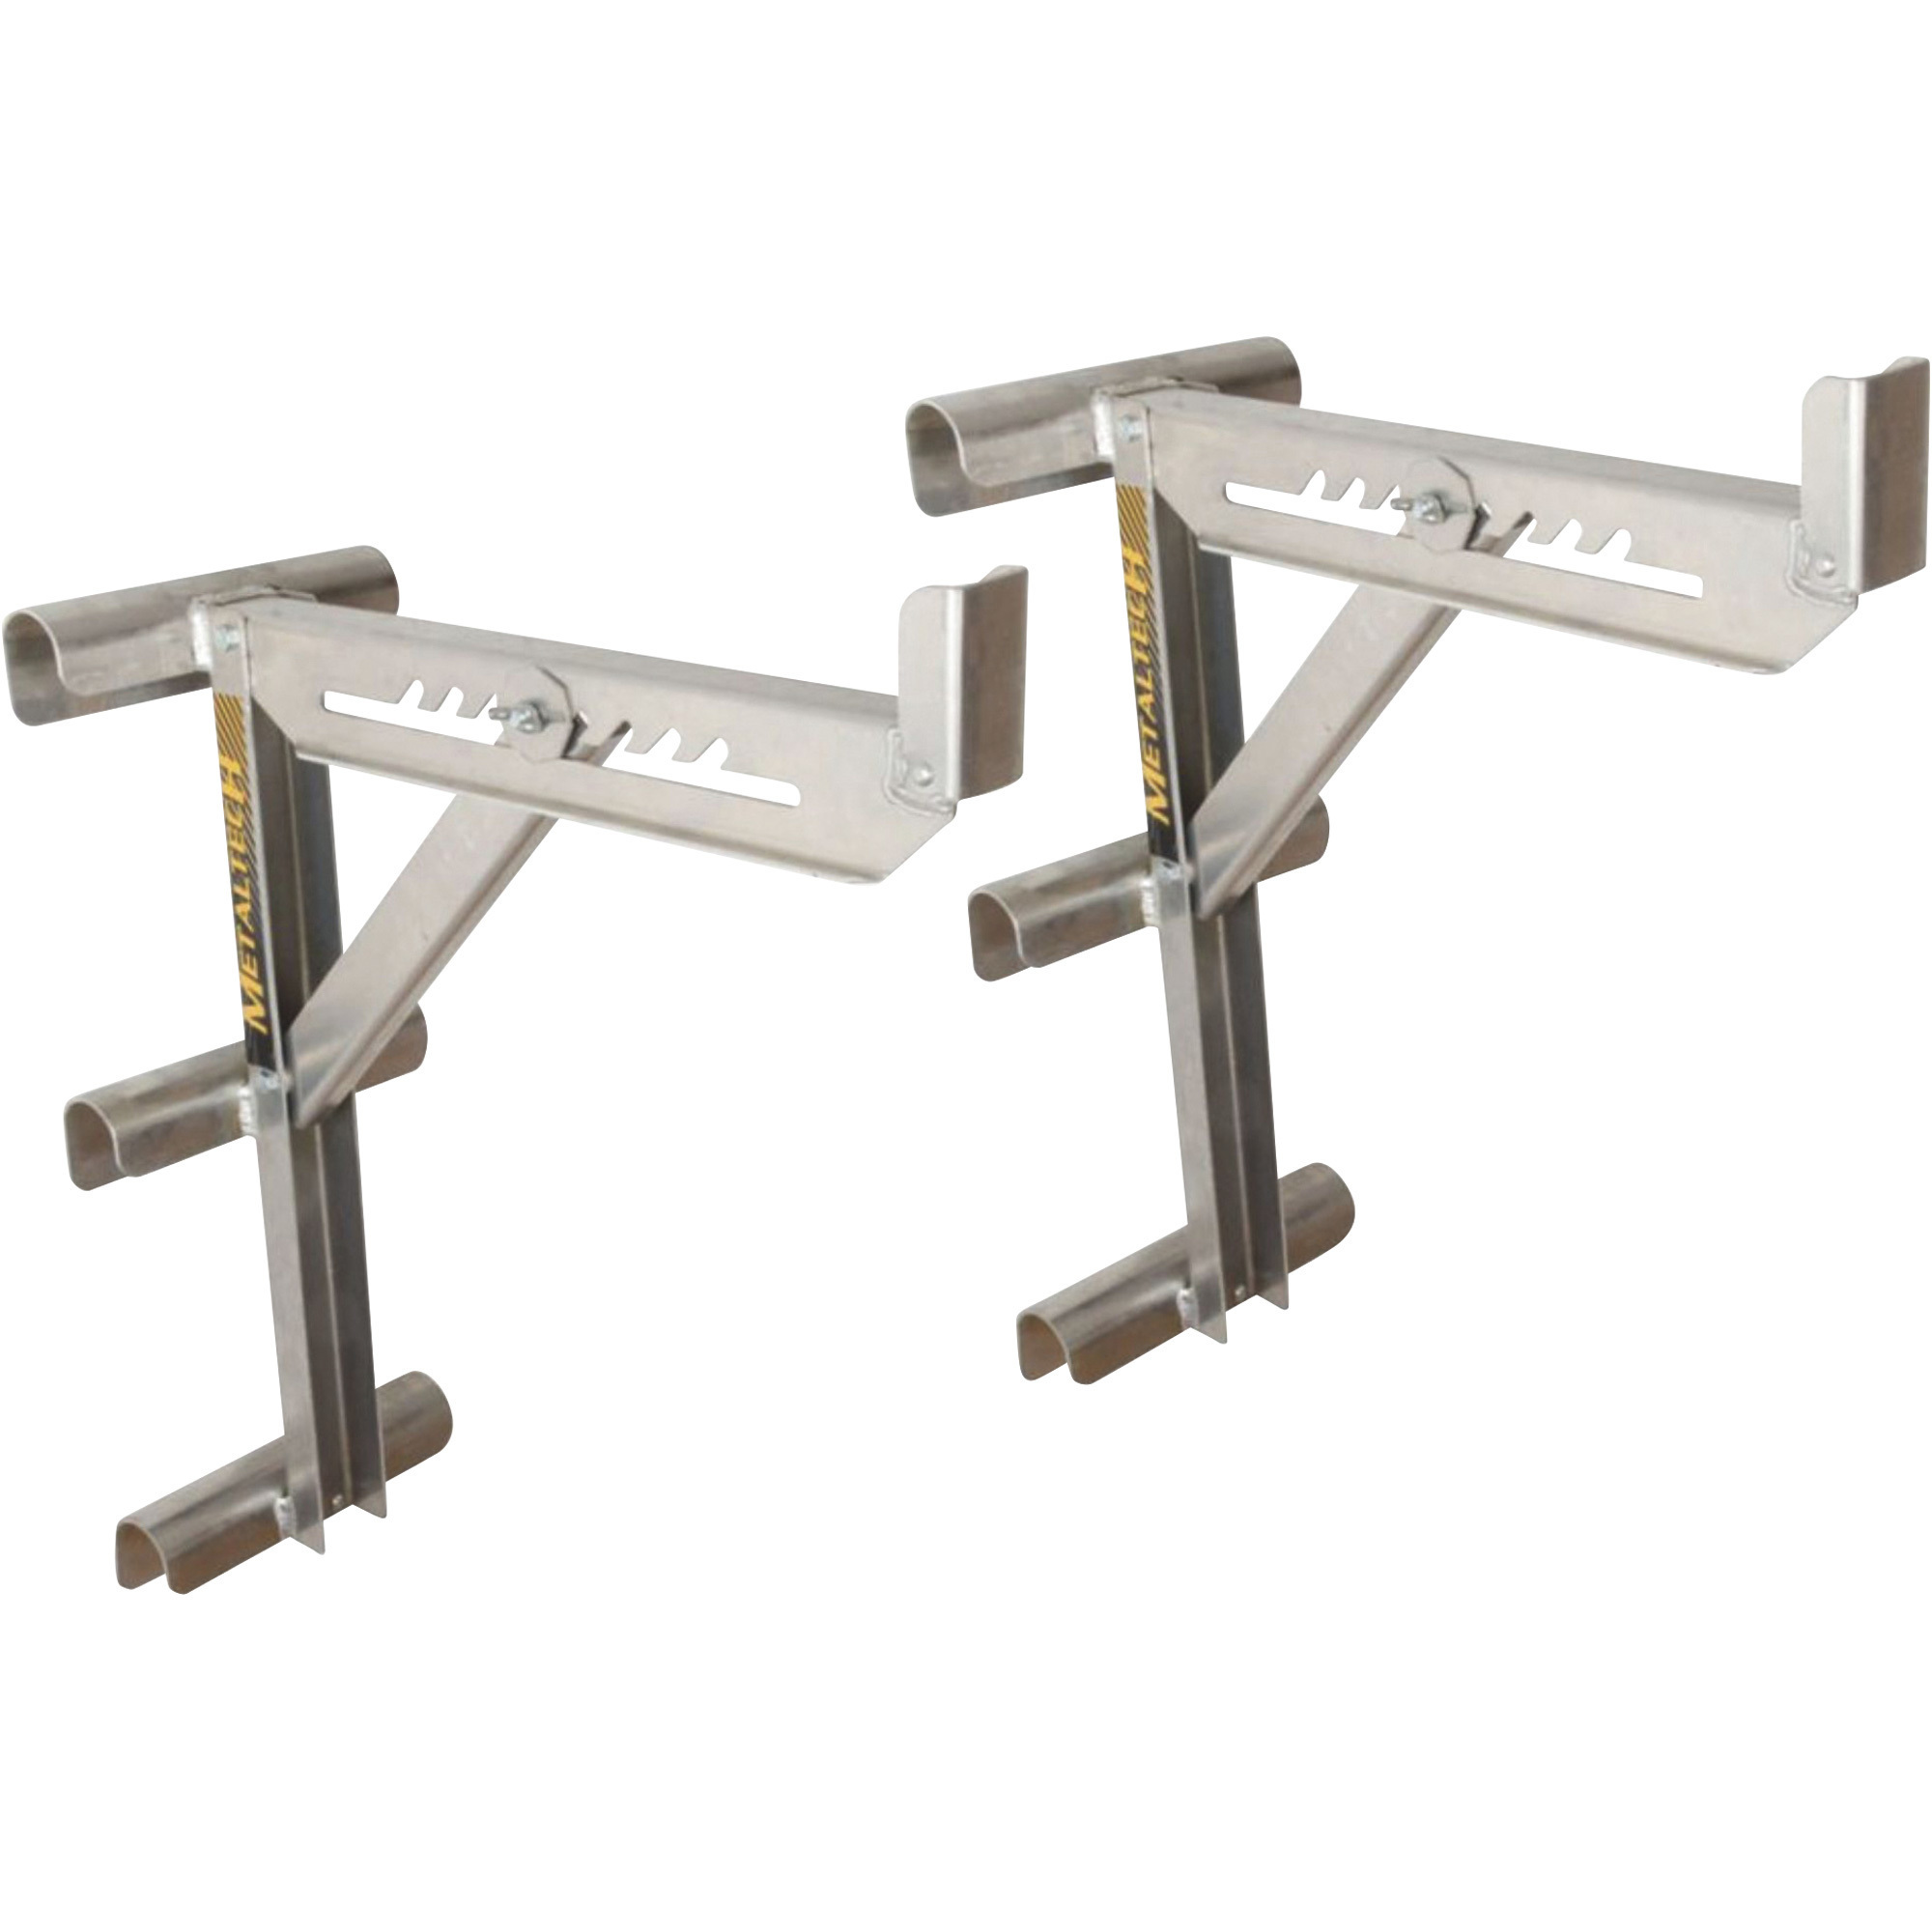 Metaltech 3-Rung Ladder Jack, 2-Pack, For Planks Up To 18ft.L, Model E-LJ30P